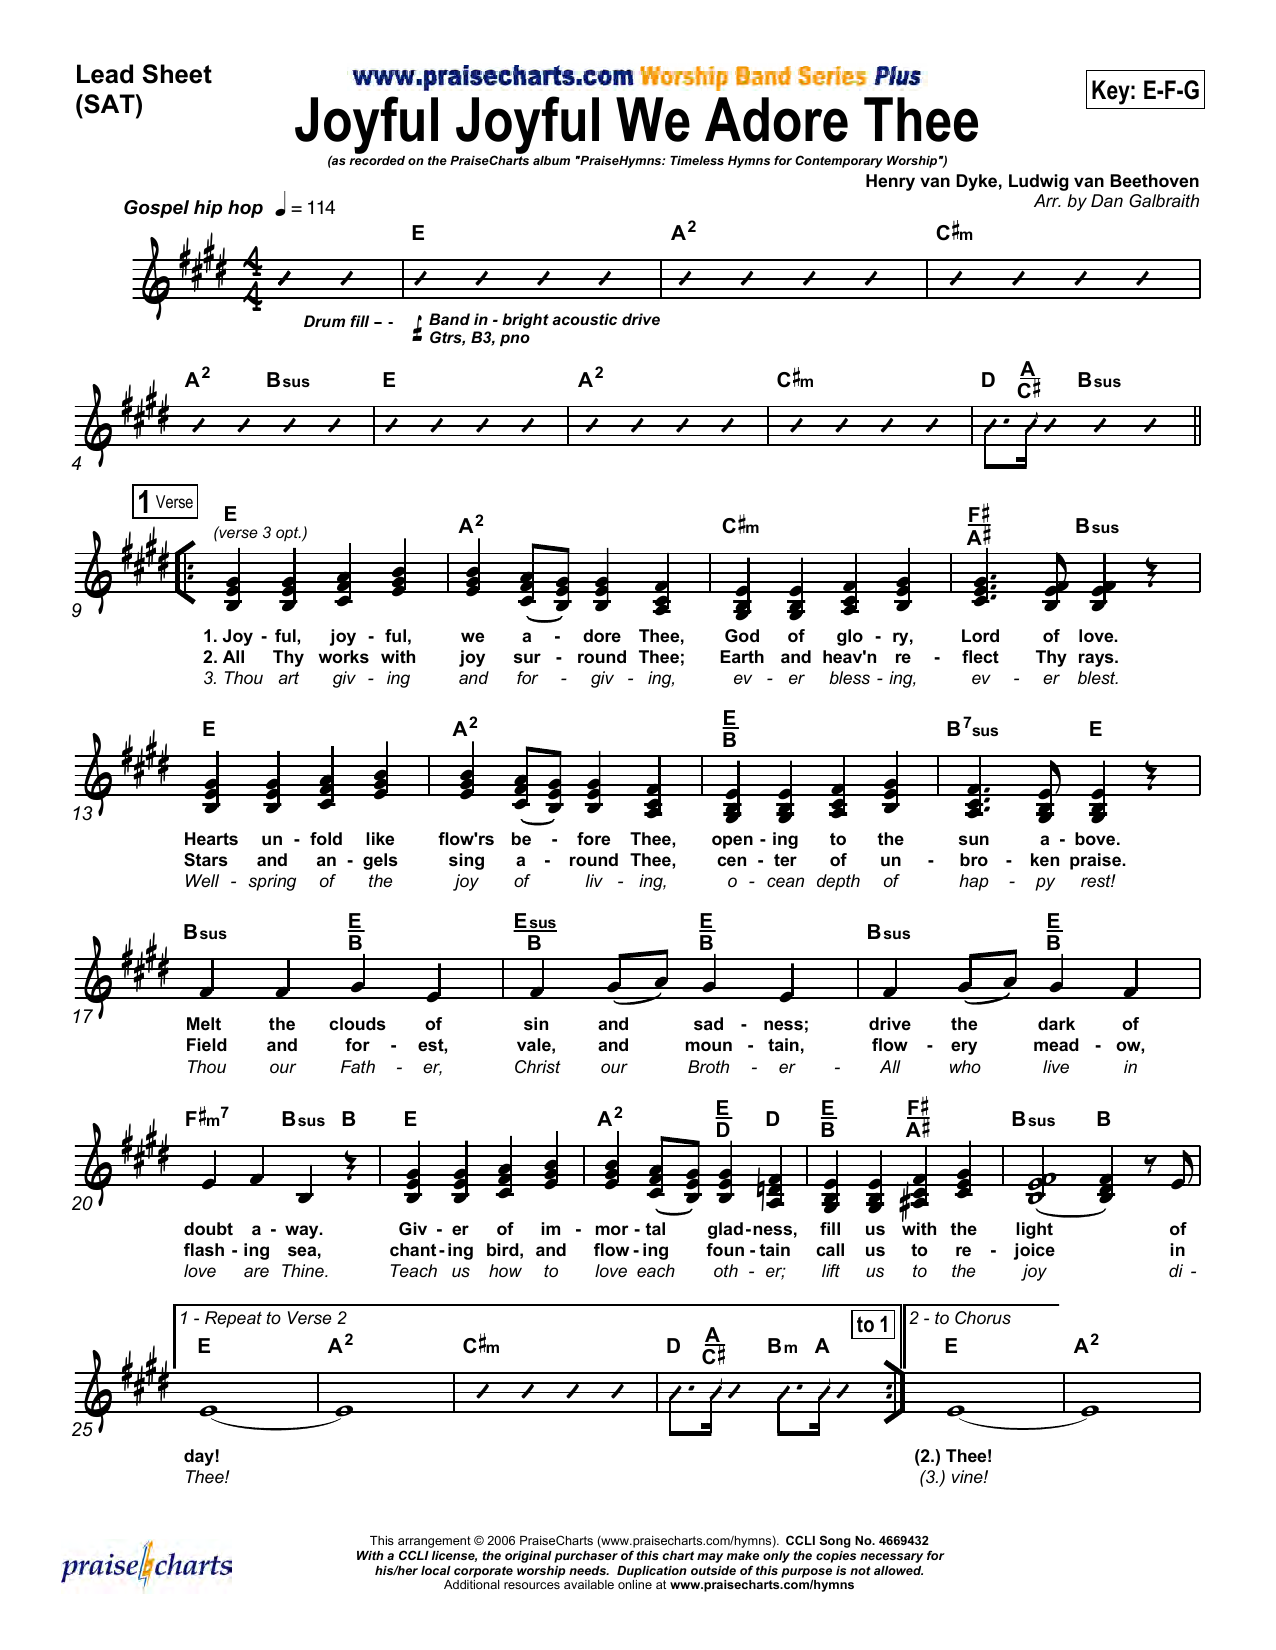 Dan Galbraith Joyful Joyful We Adore Thee Sheet Music Notes & Chords for Lead Sheet / Fake Book - Download or Print PDF